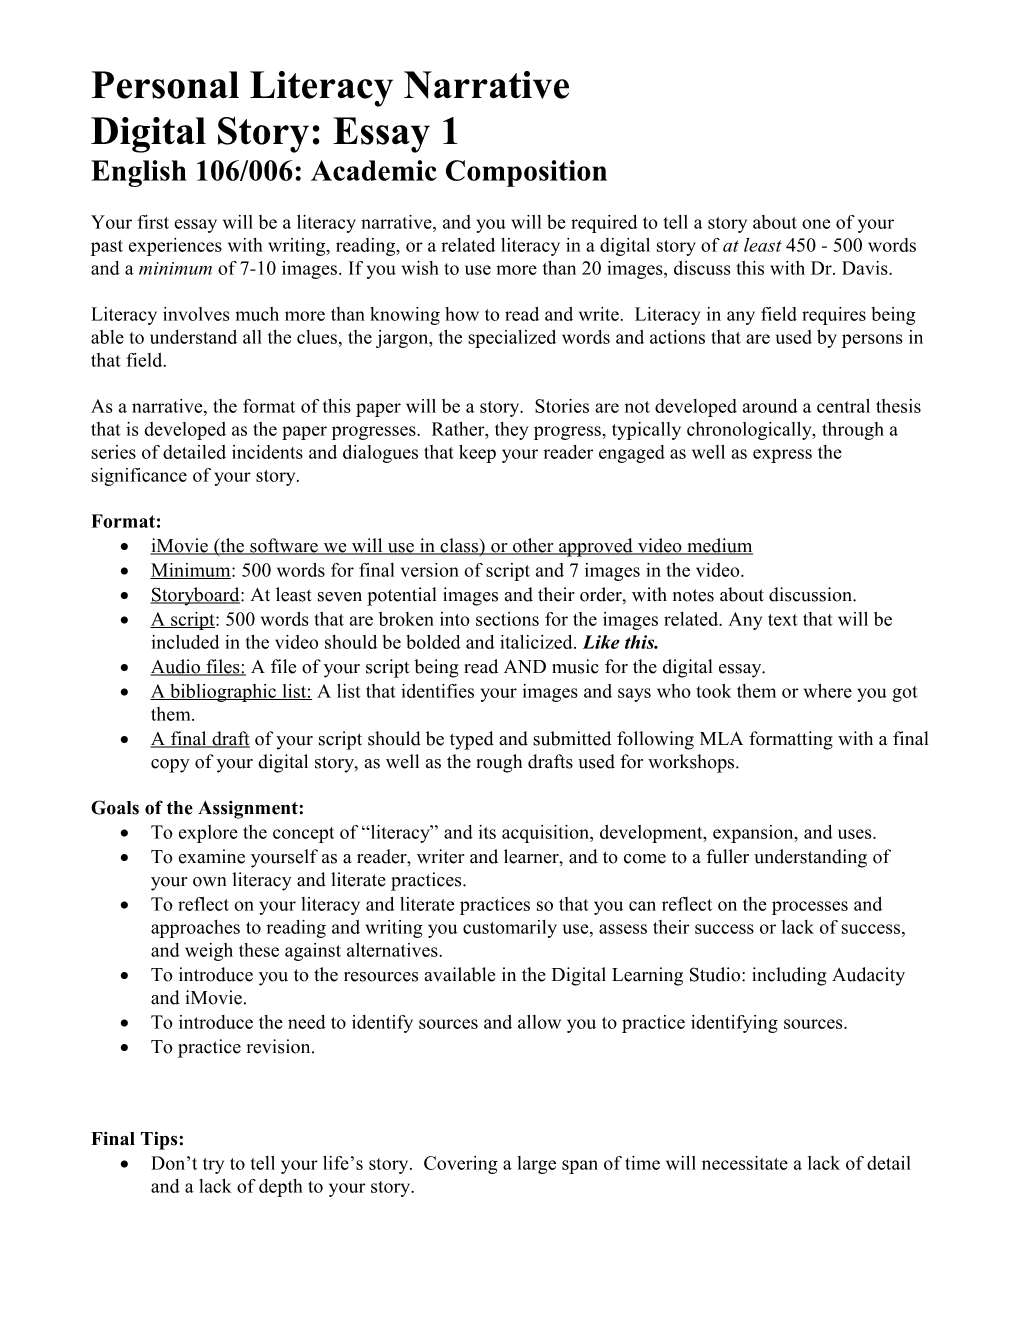 English 106: Academic Composition